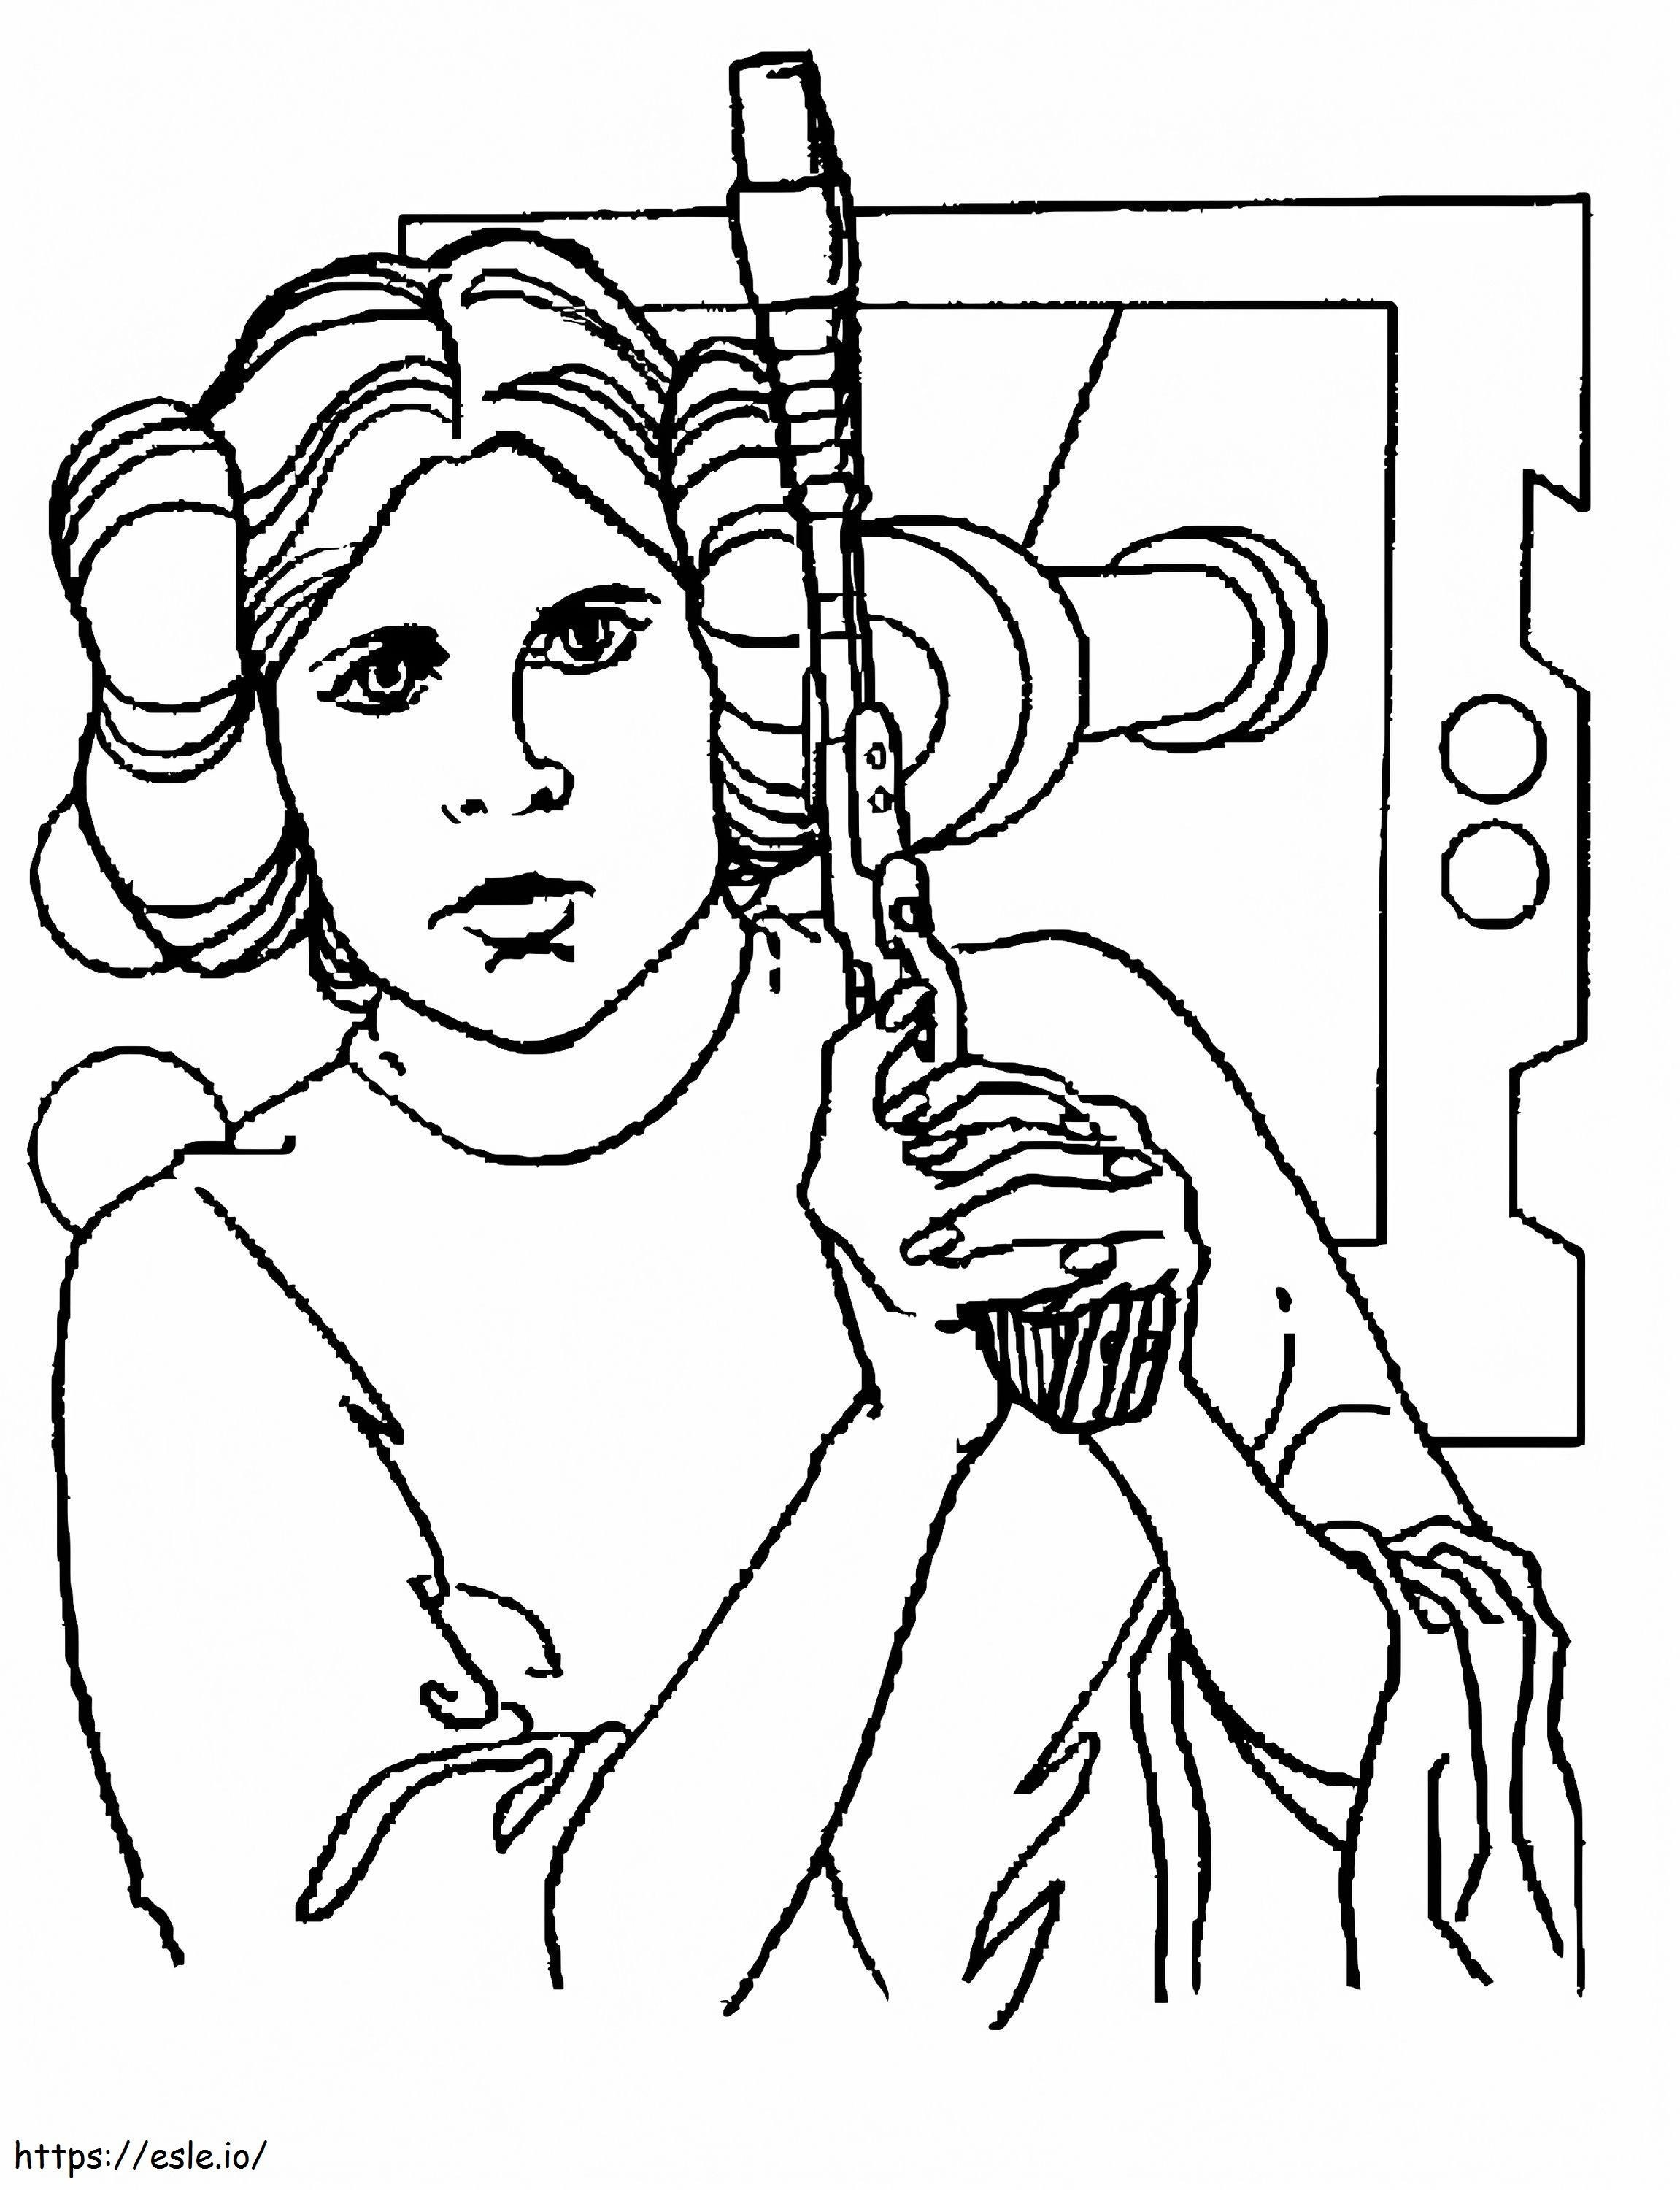 Prinzessin Leia 1 ausmalbilder